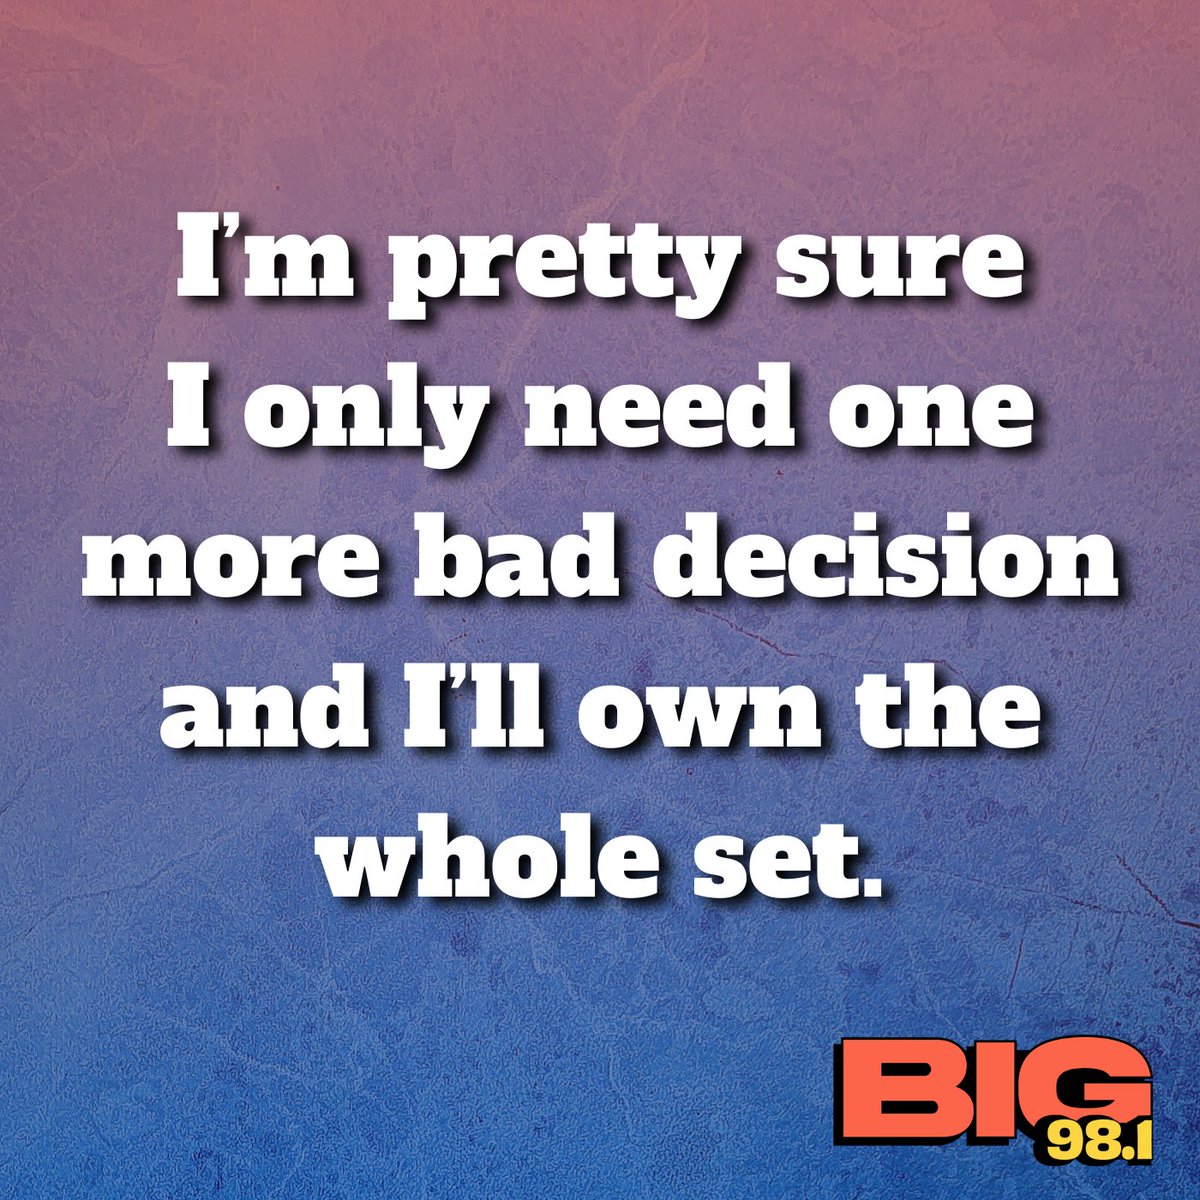 Gotta collect 'em all! 😂 #BIG981